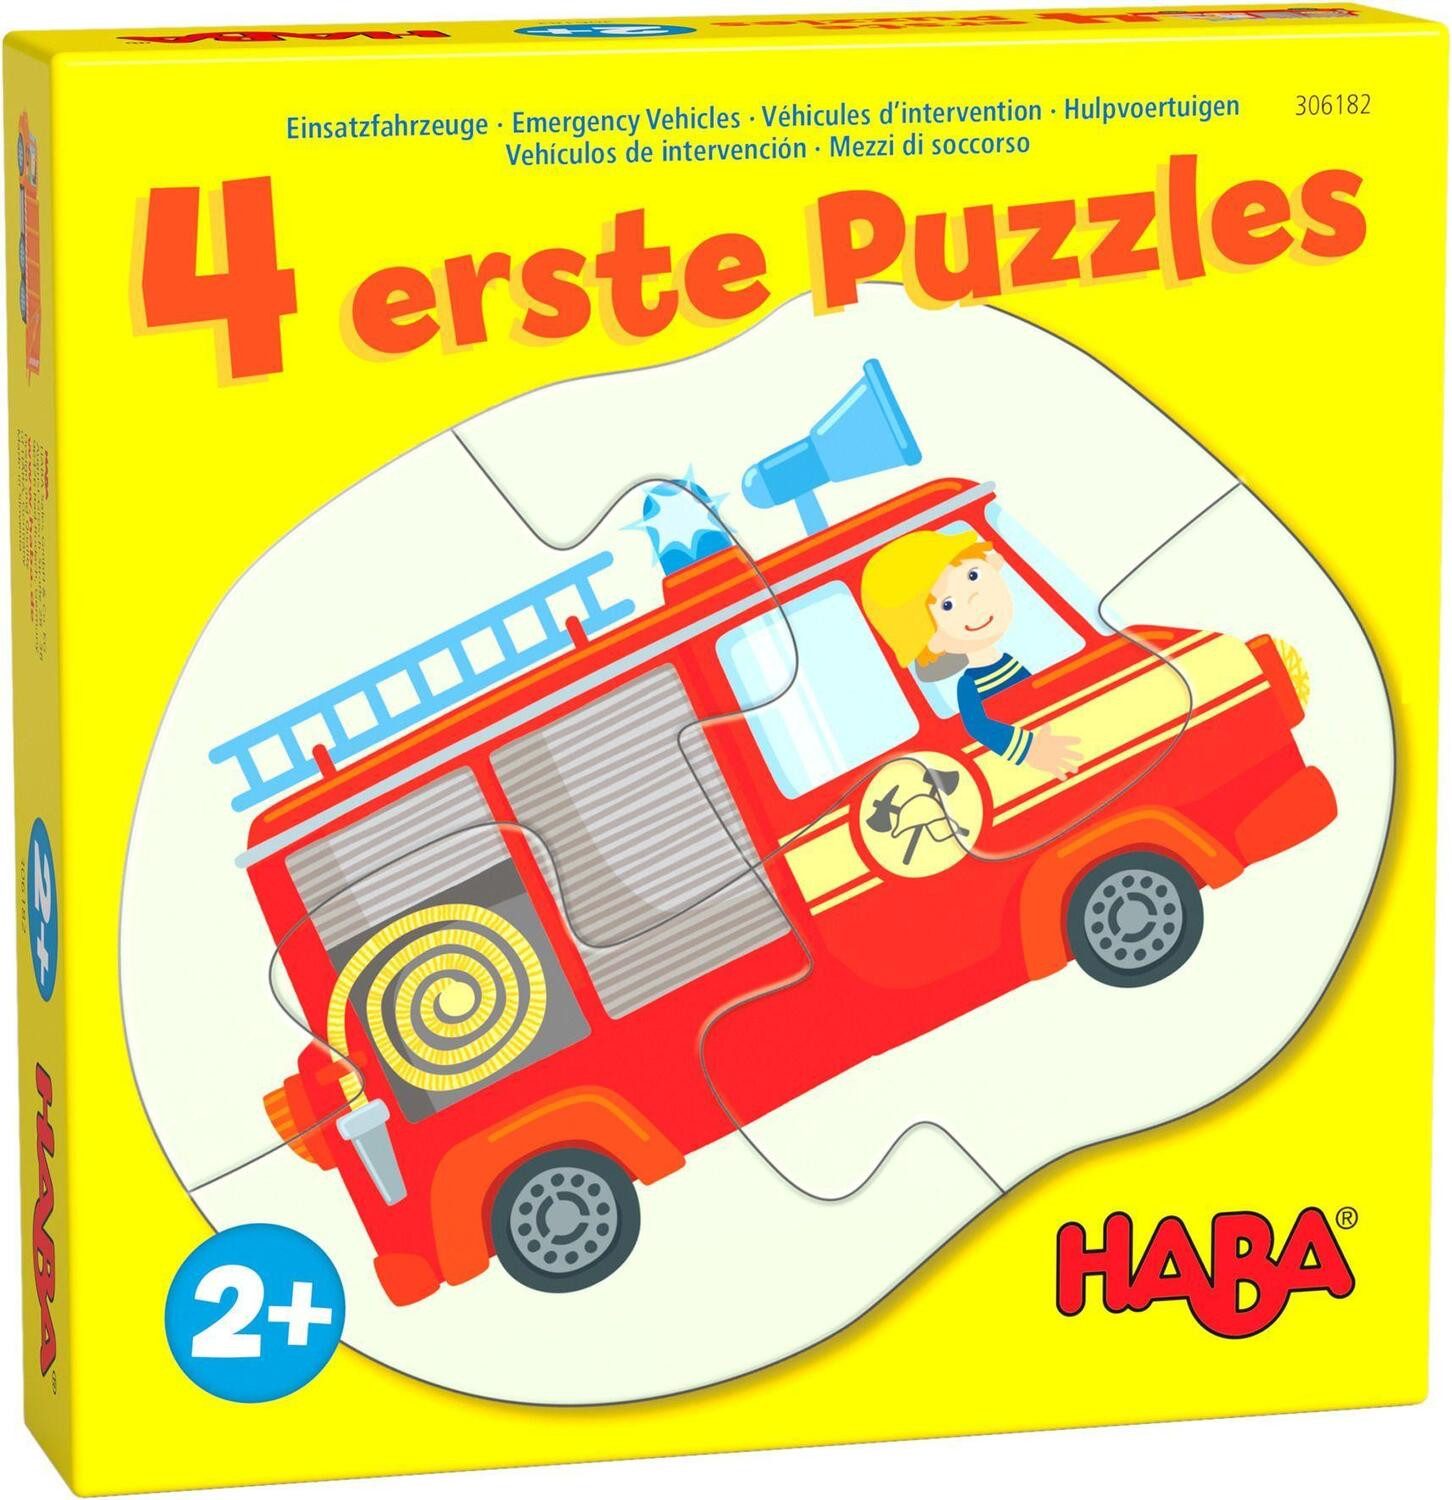 Haba Puzzle 4 erste Puzzles - Einsatzfahrzeuge, Puzzleteile